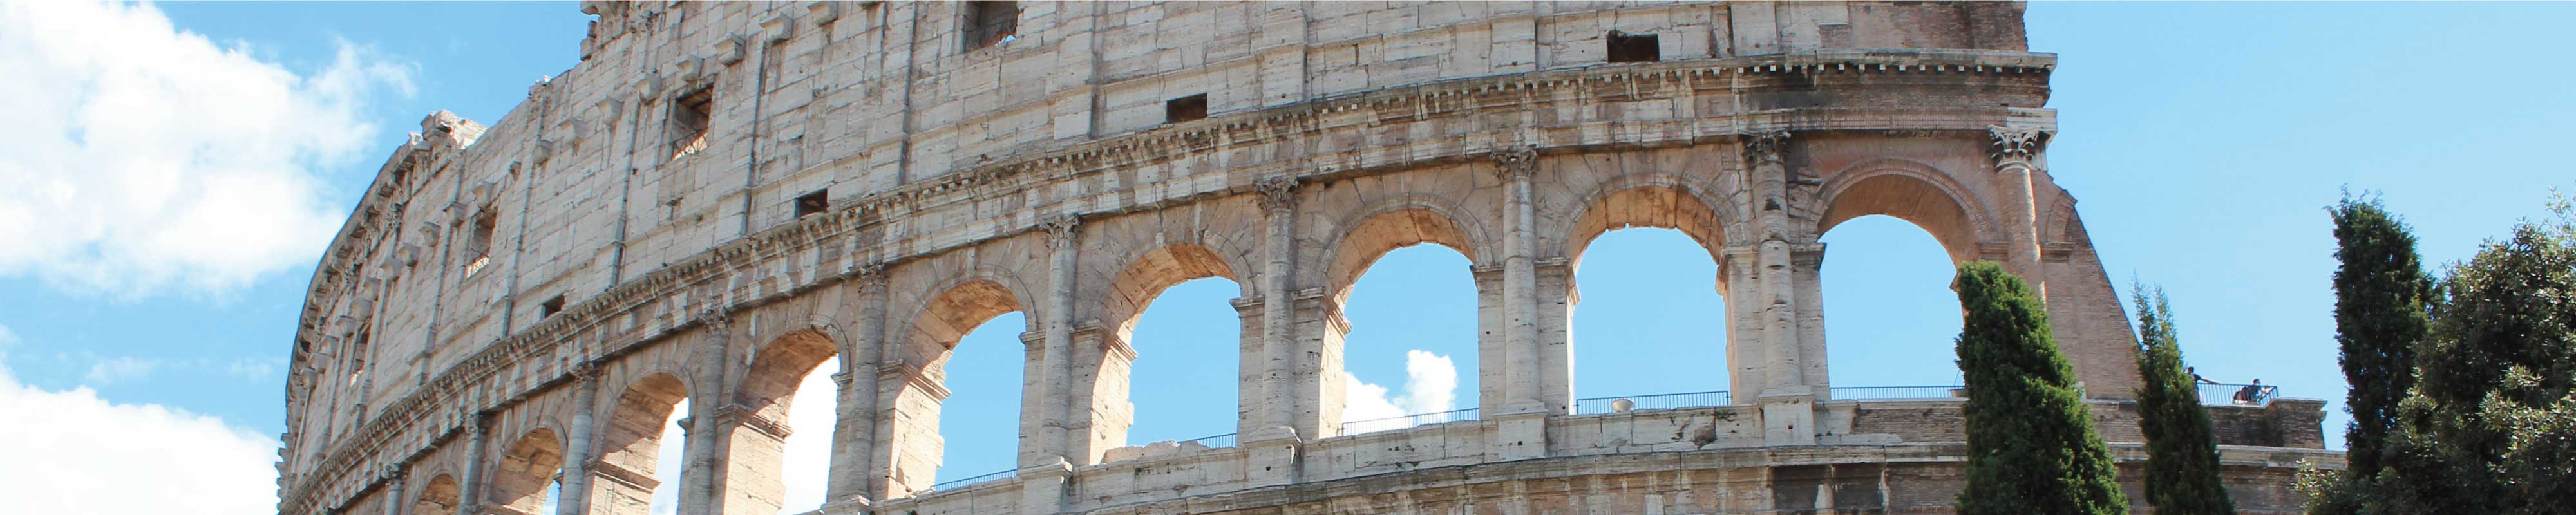 Consigna Equipaje | Coliseo en Roma - Nannybag